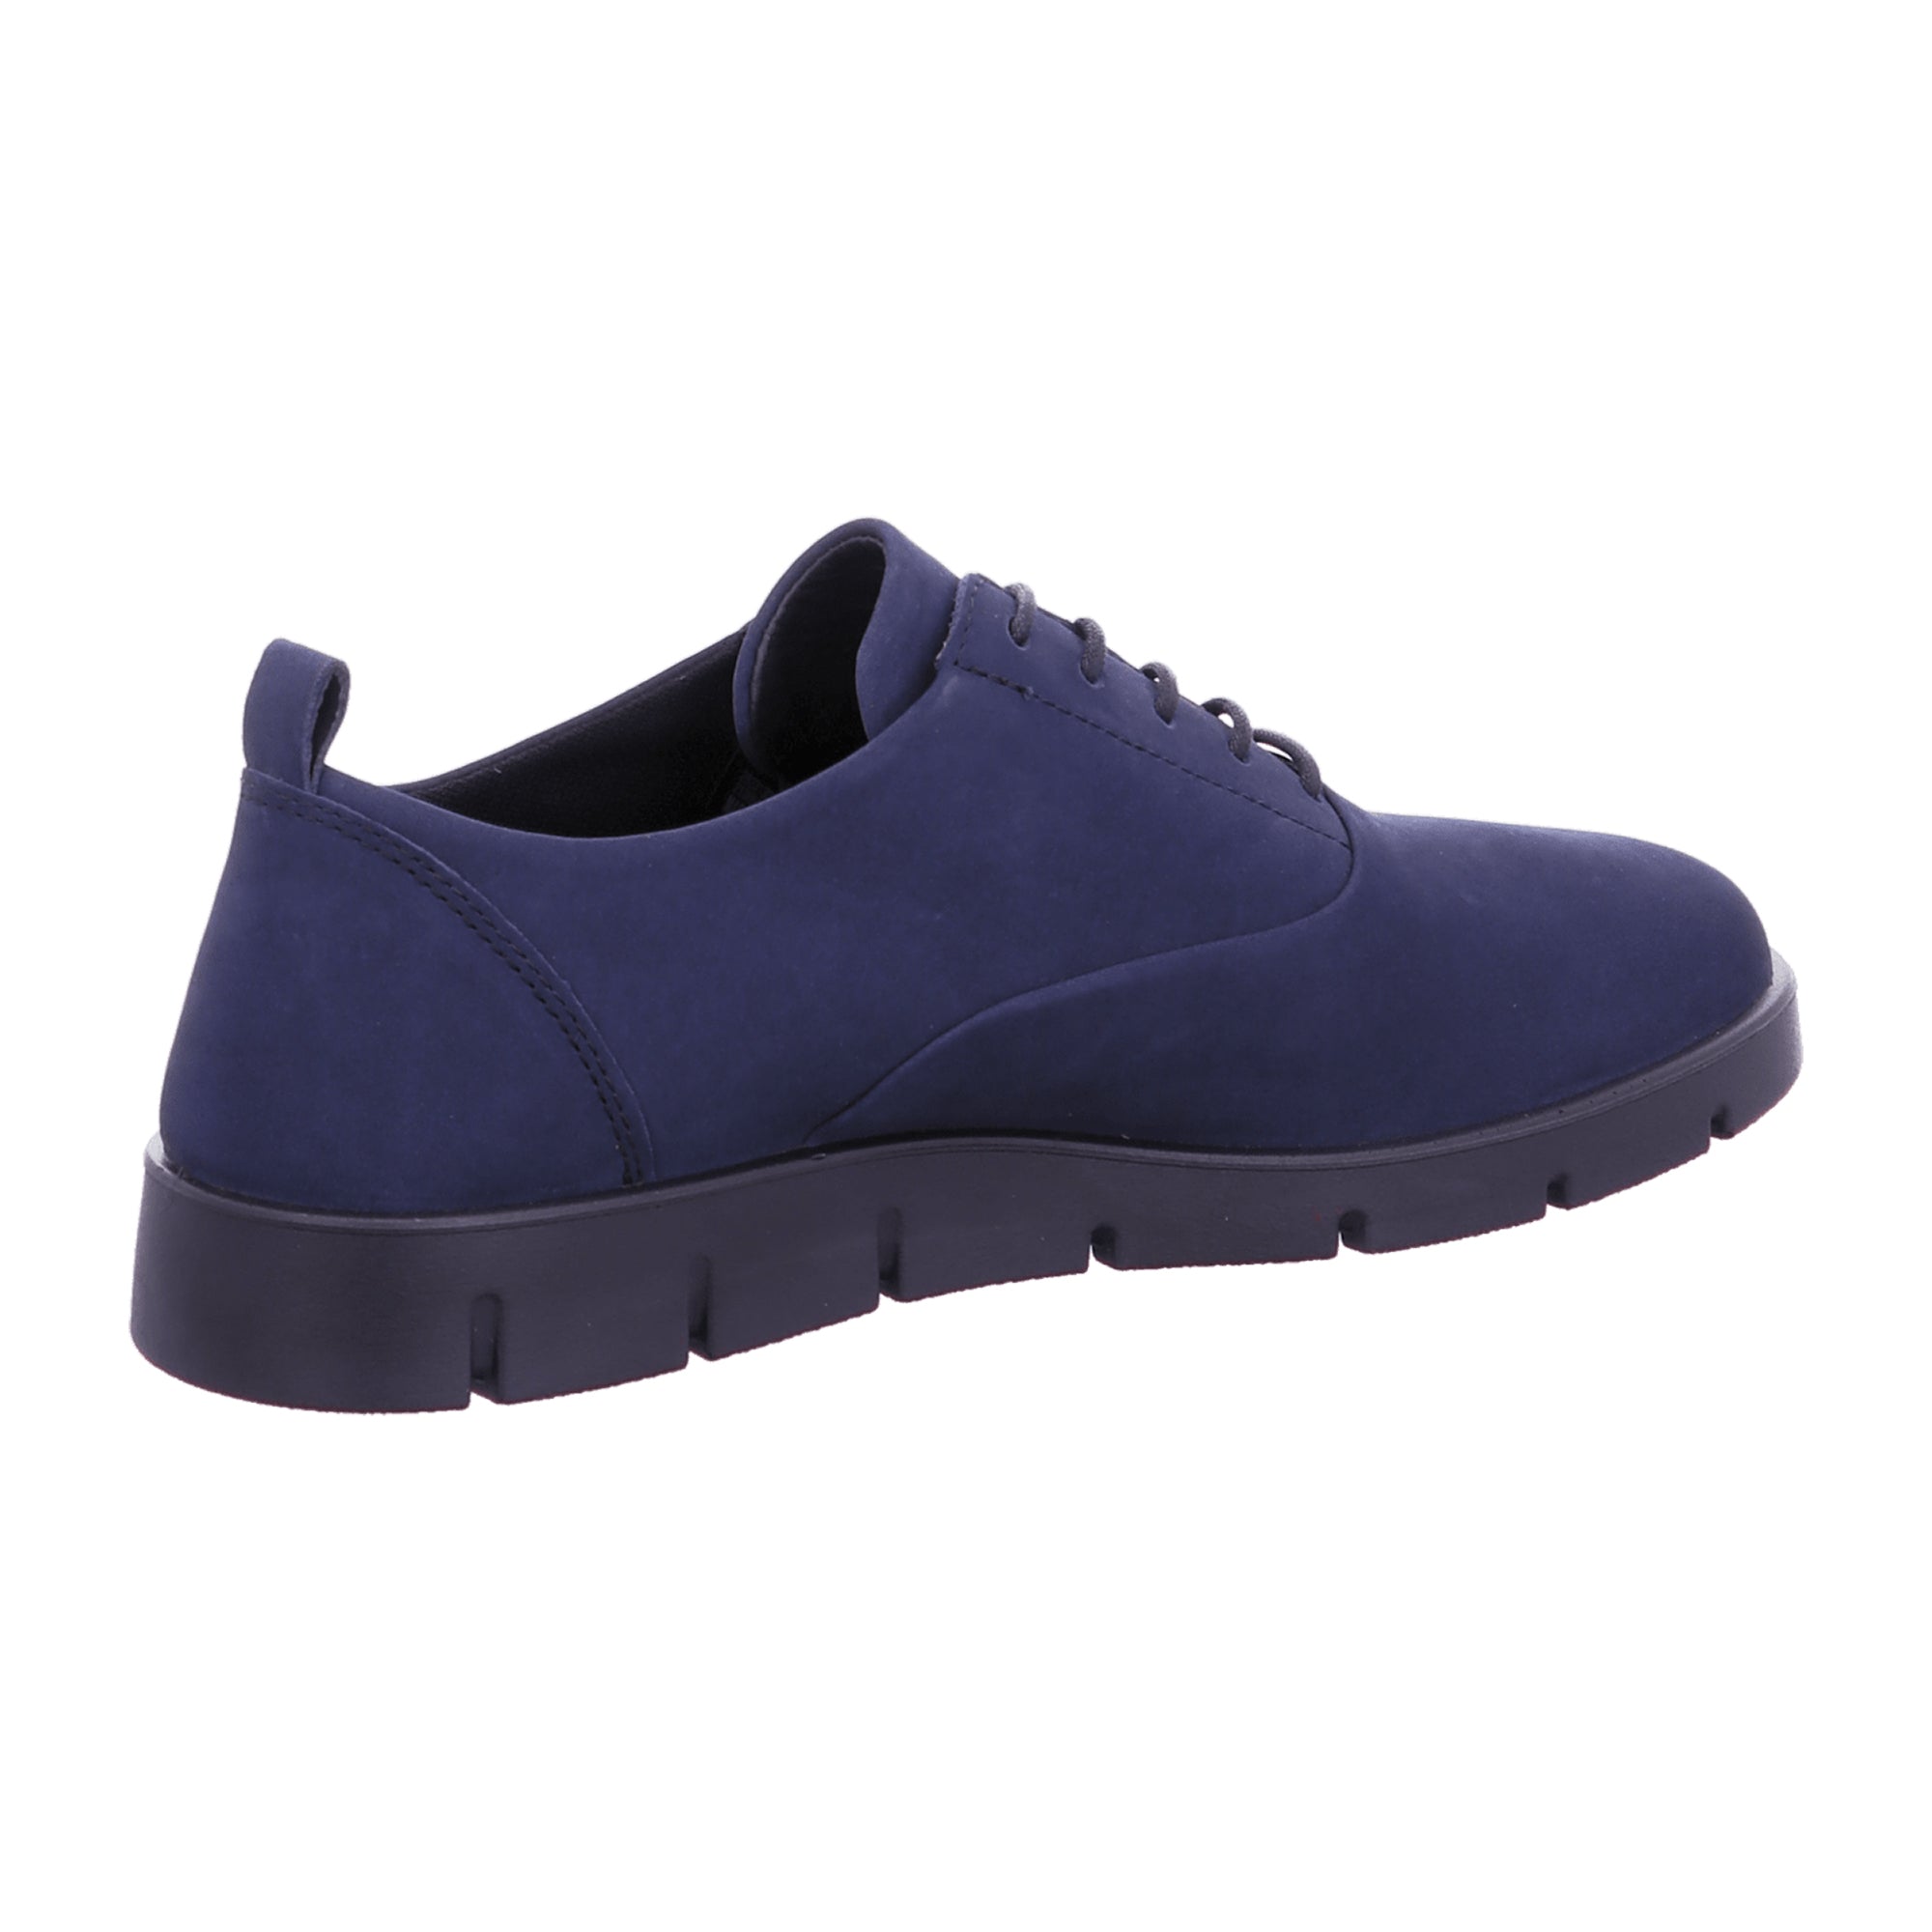 Ecco 282313 Women's Comfortable Blue Shoes - Fashionable & Durable